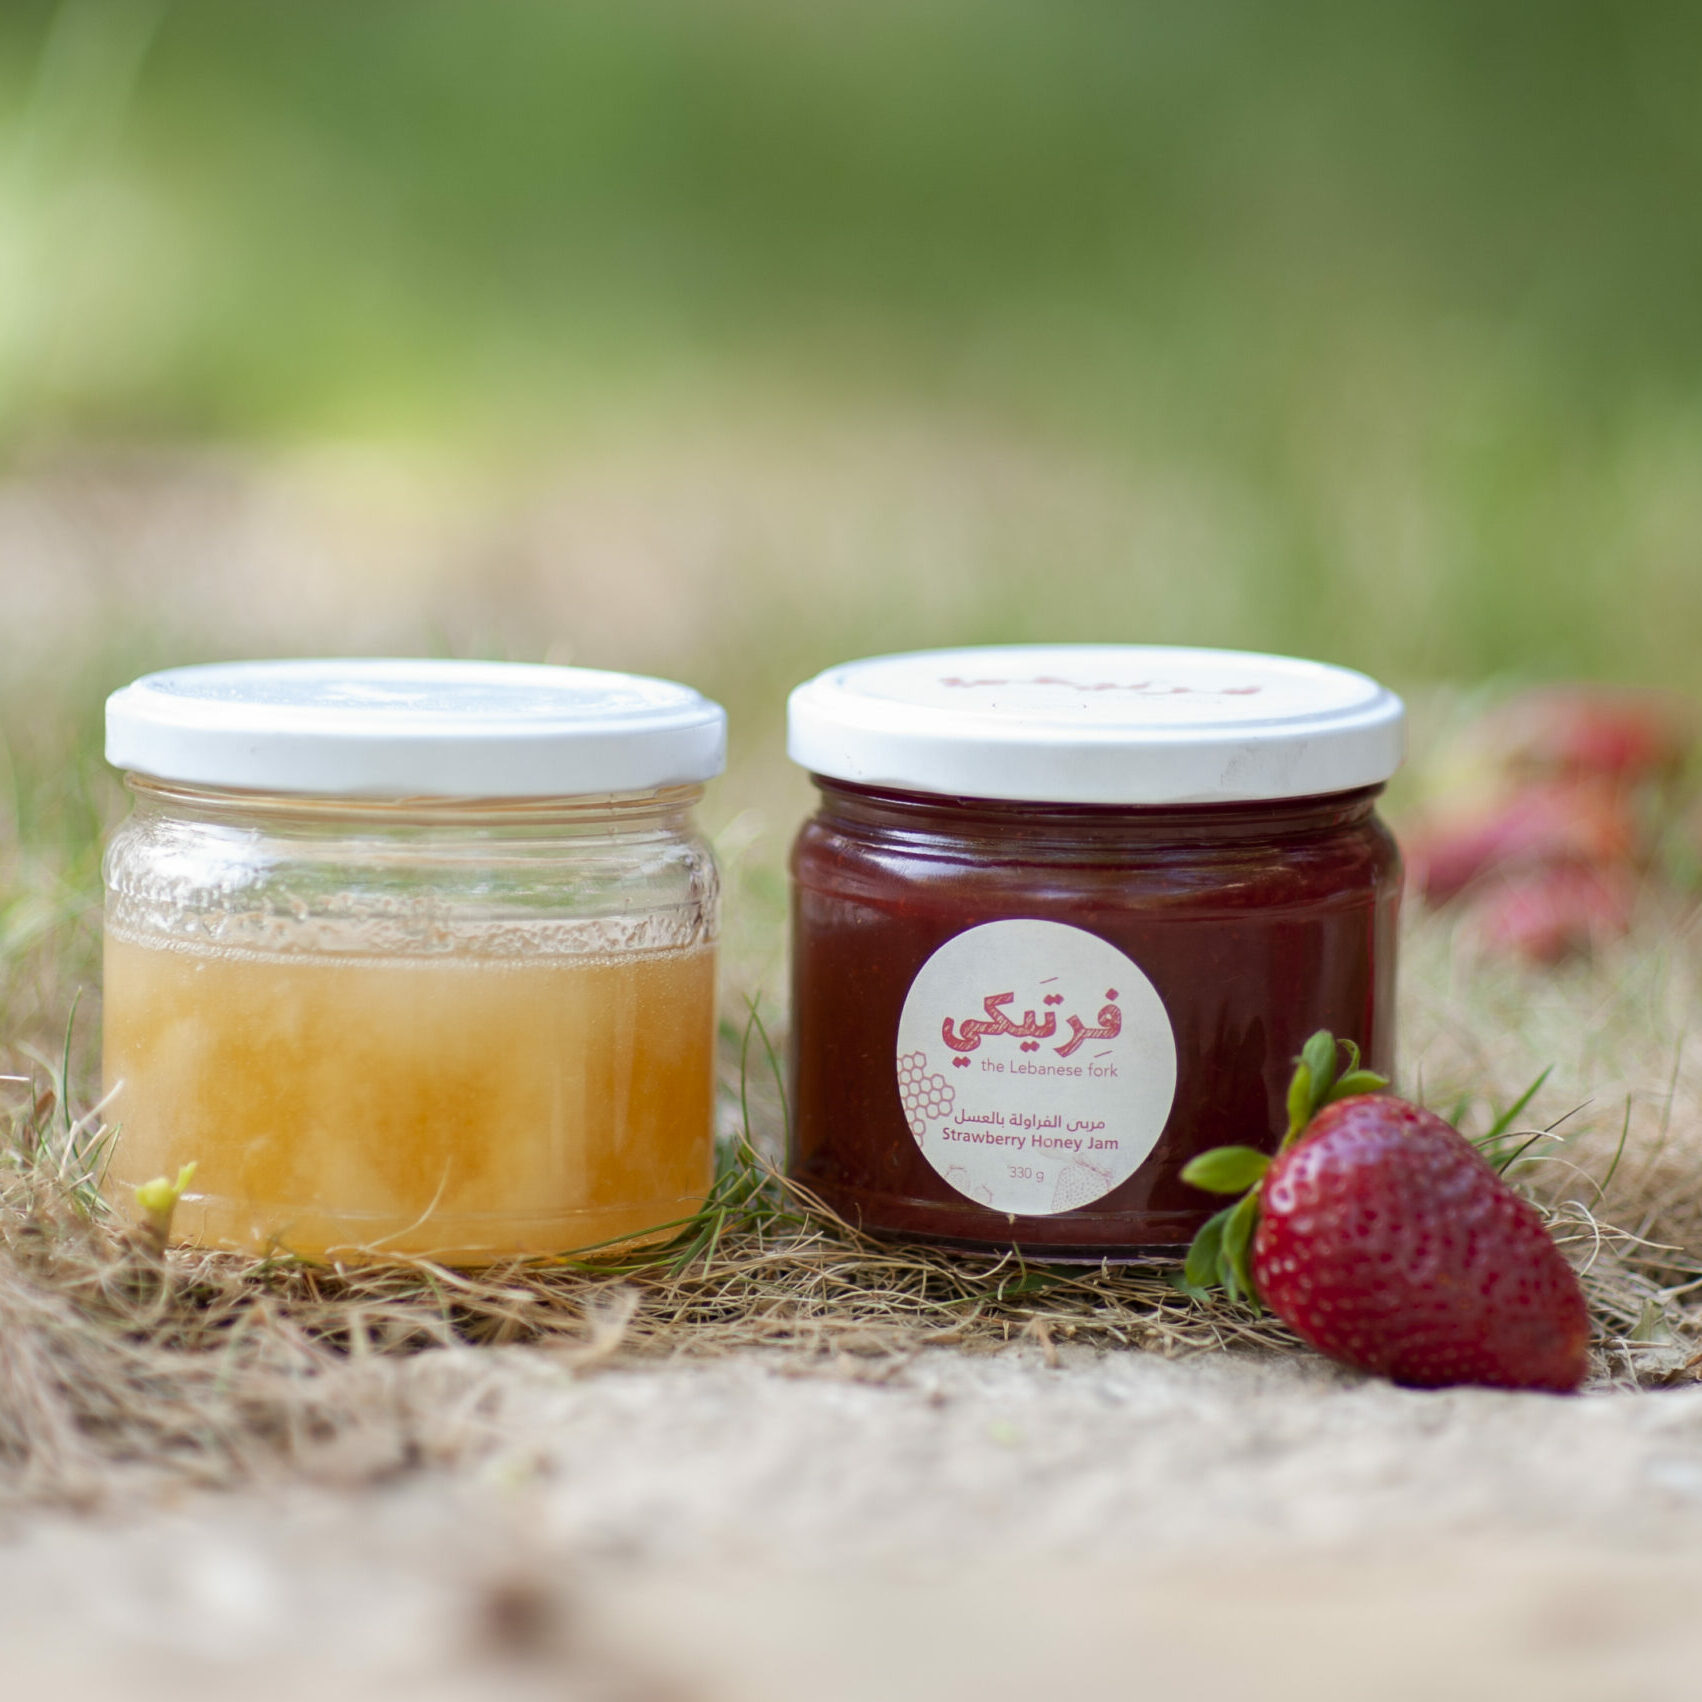 Strawberry honey jam with honey jar